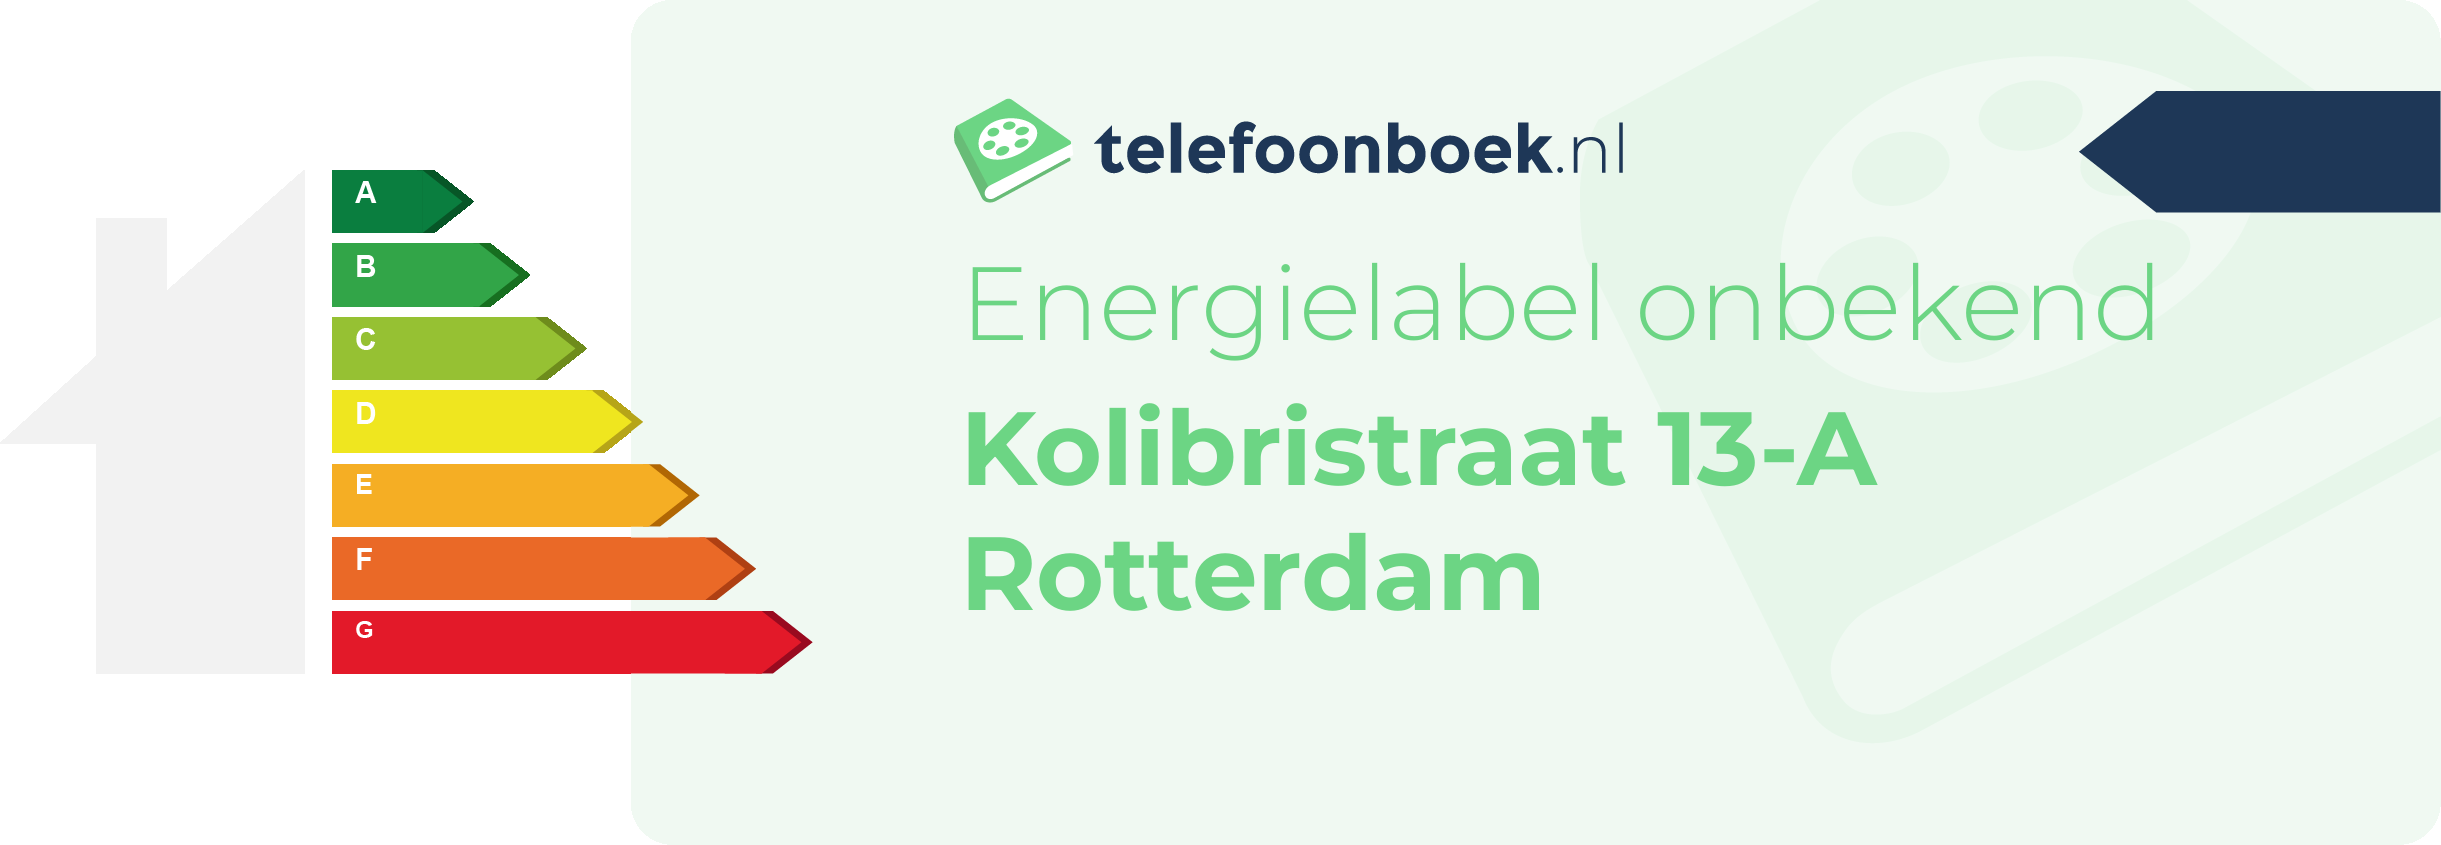 Energielabel Kolibristraat 13-A Rotterdam